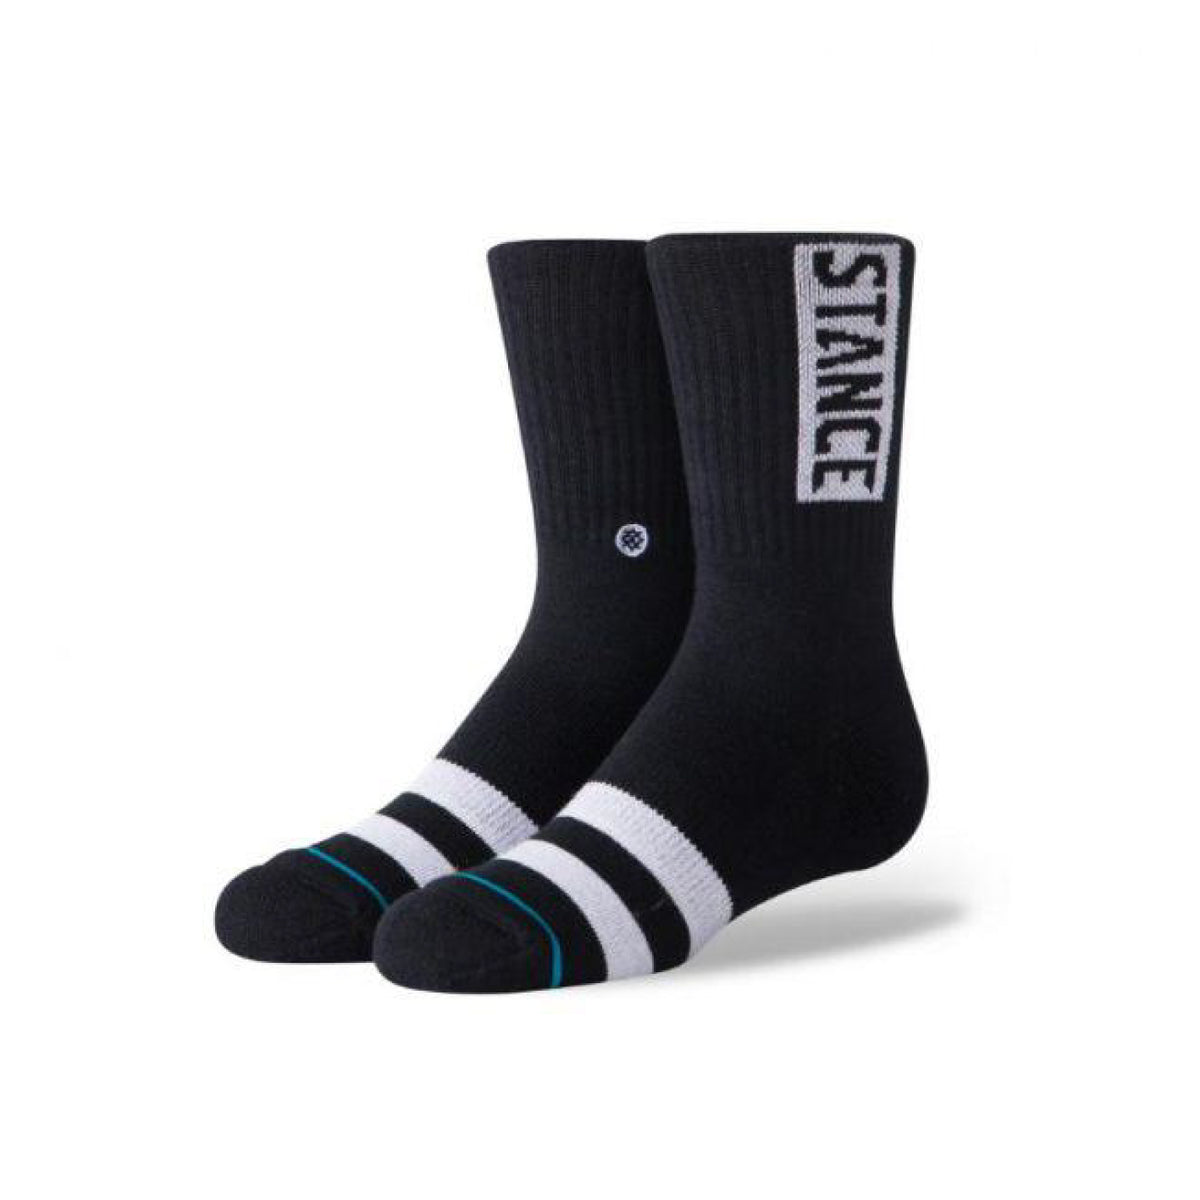 Stance - Kids OG Socks - Black